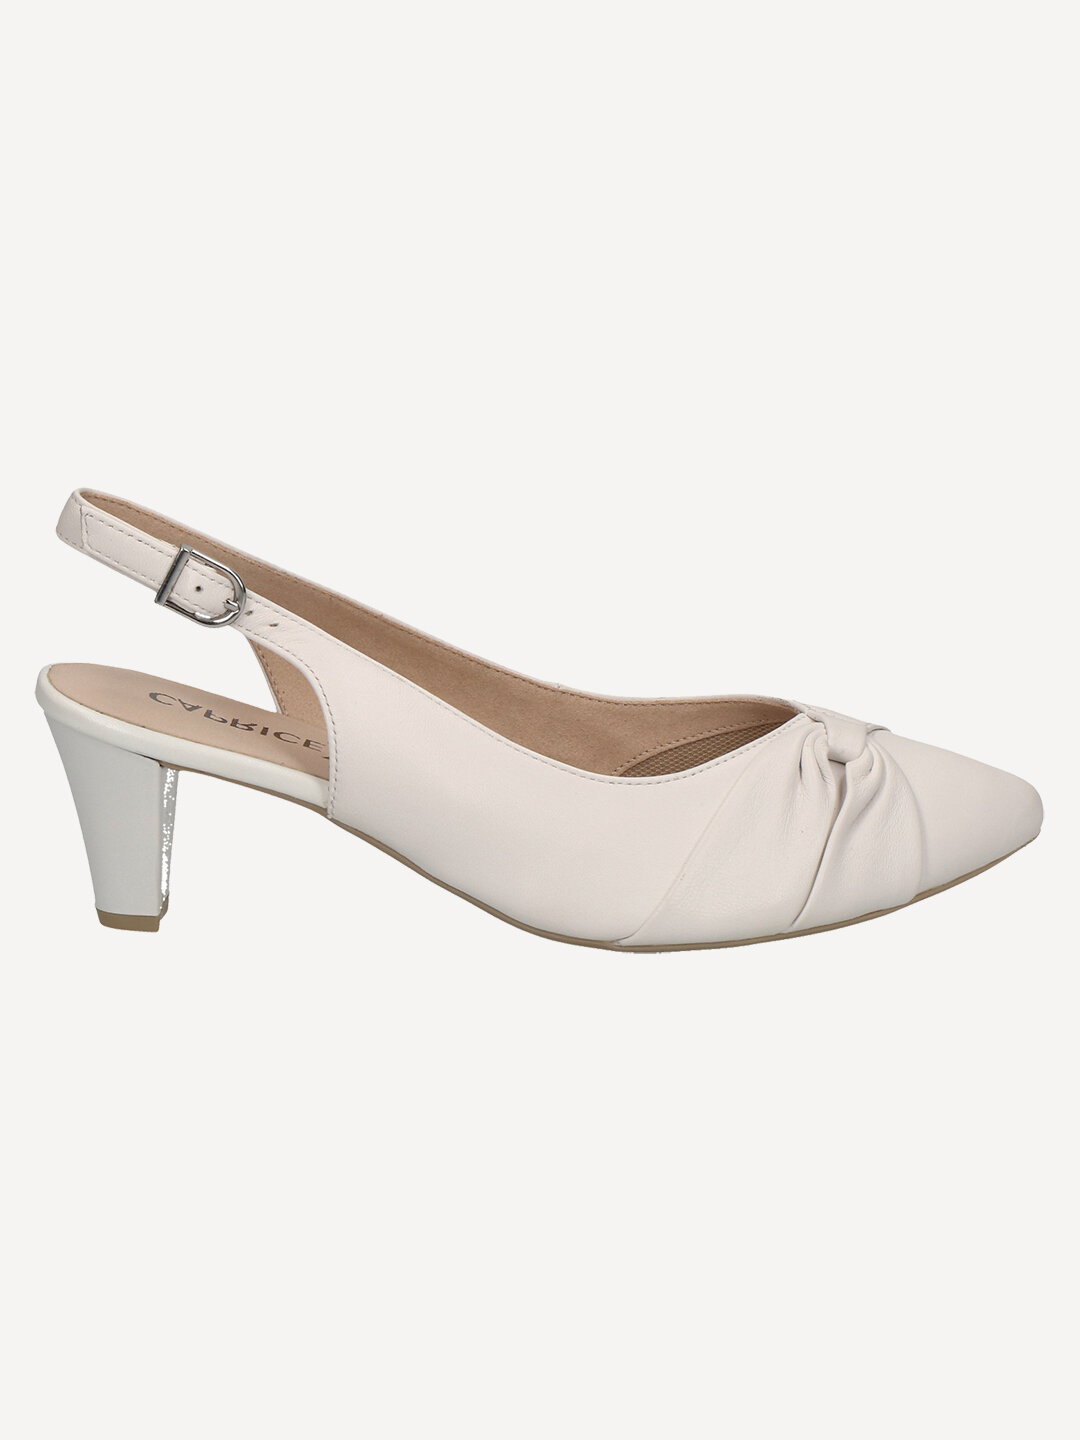 Туфли женские Caprice 2962020139 белые 38.5 RU